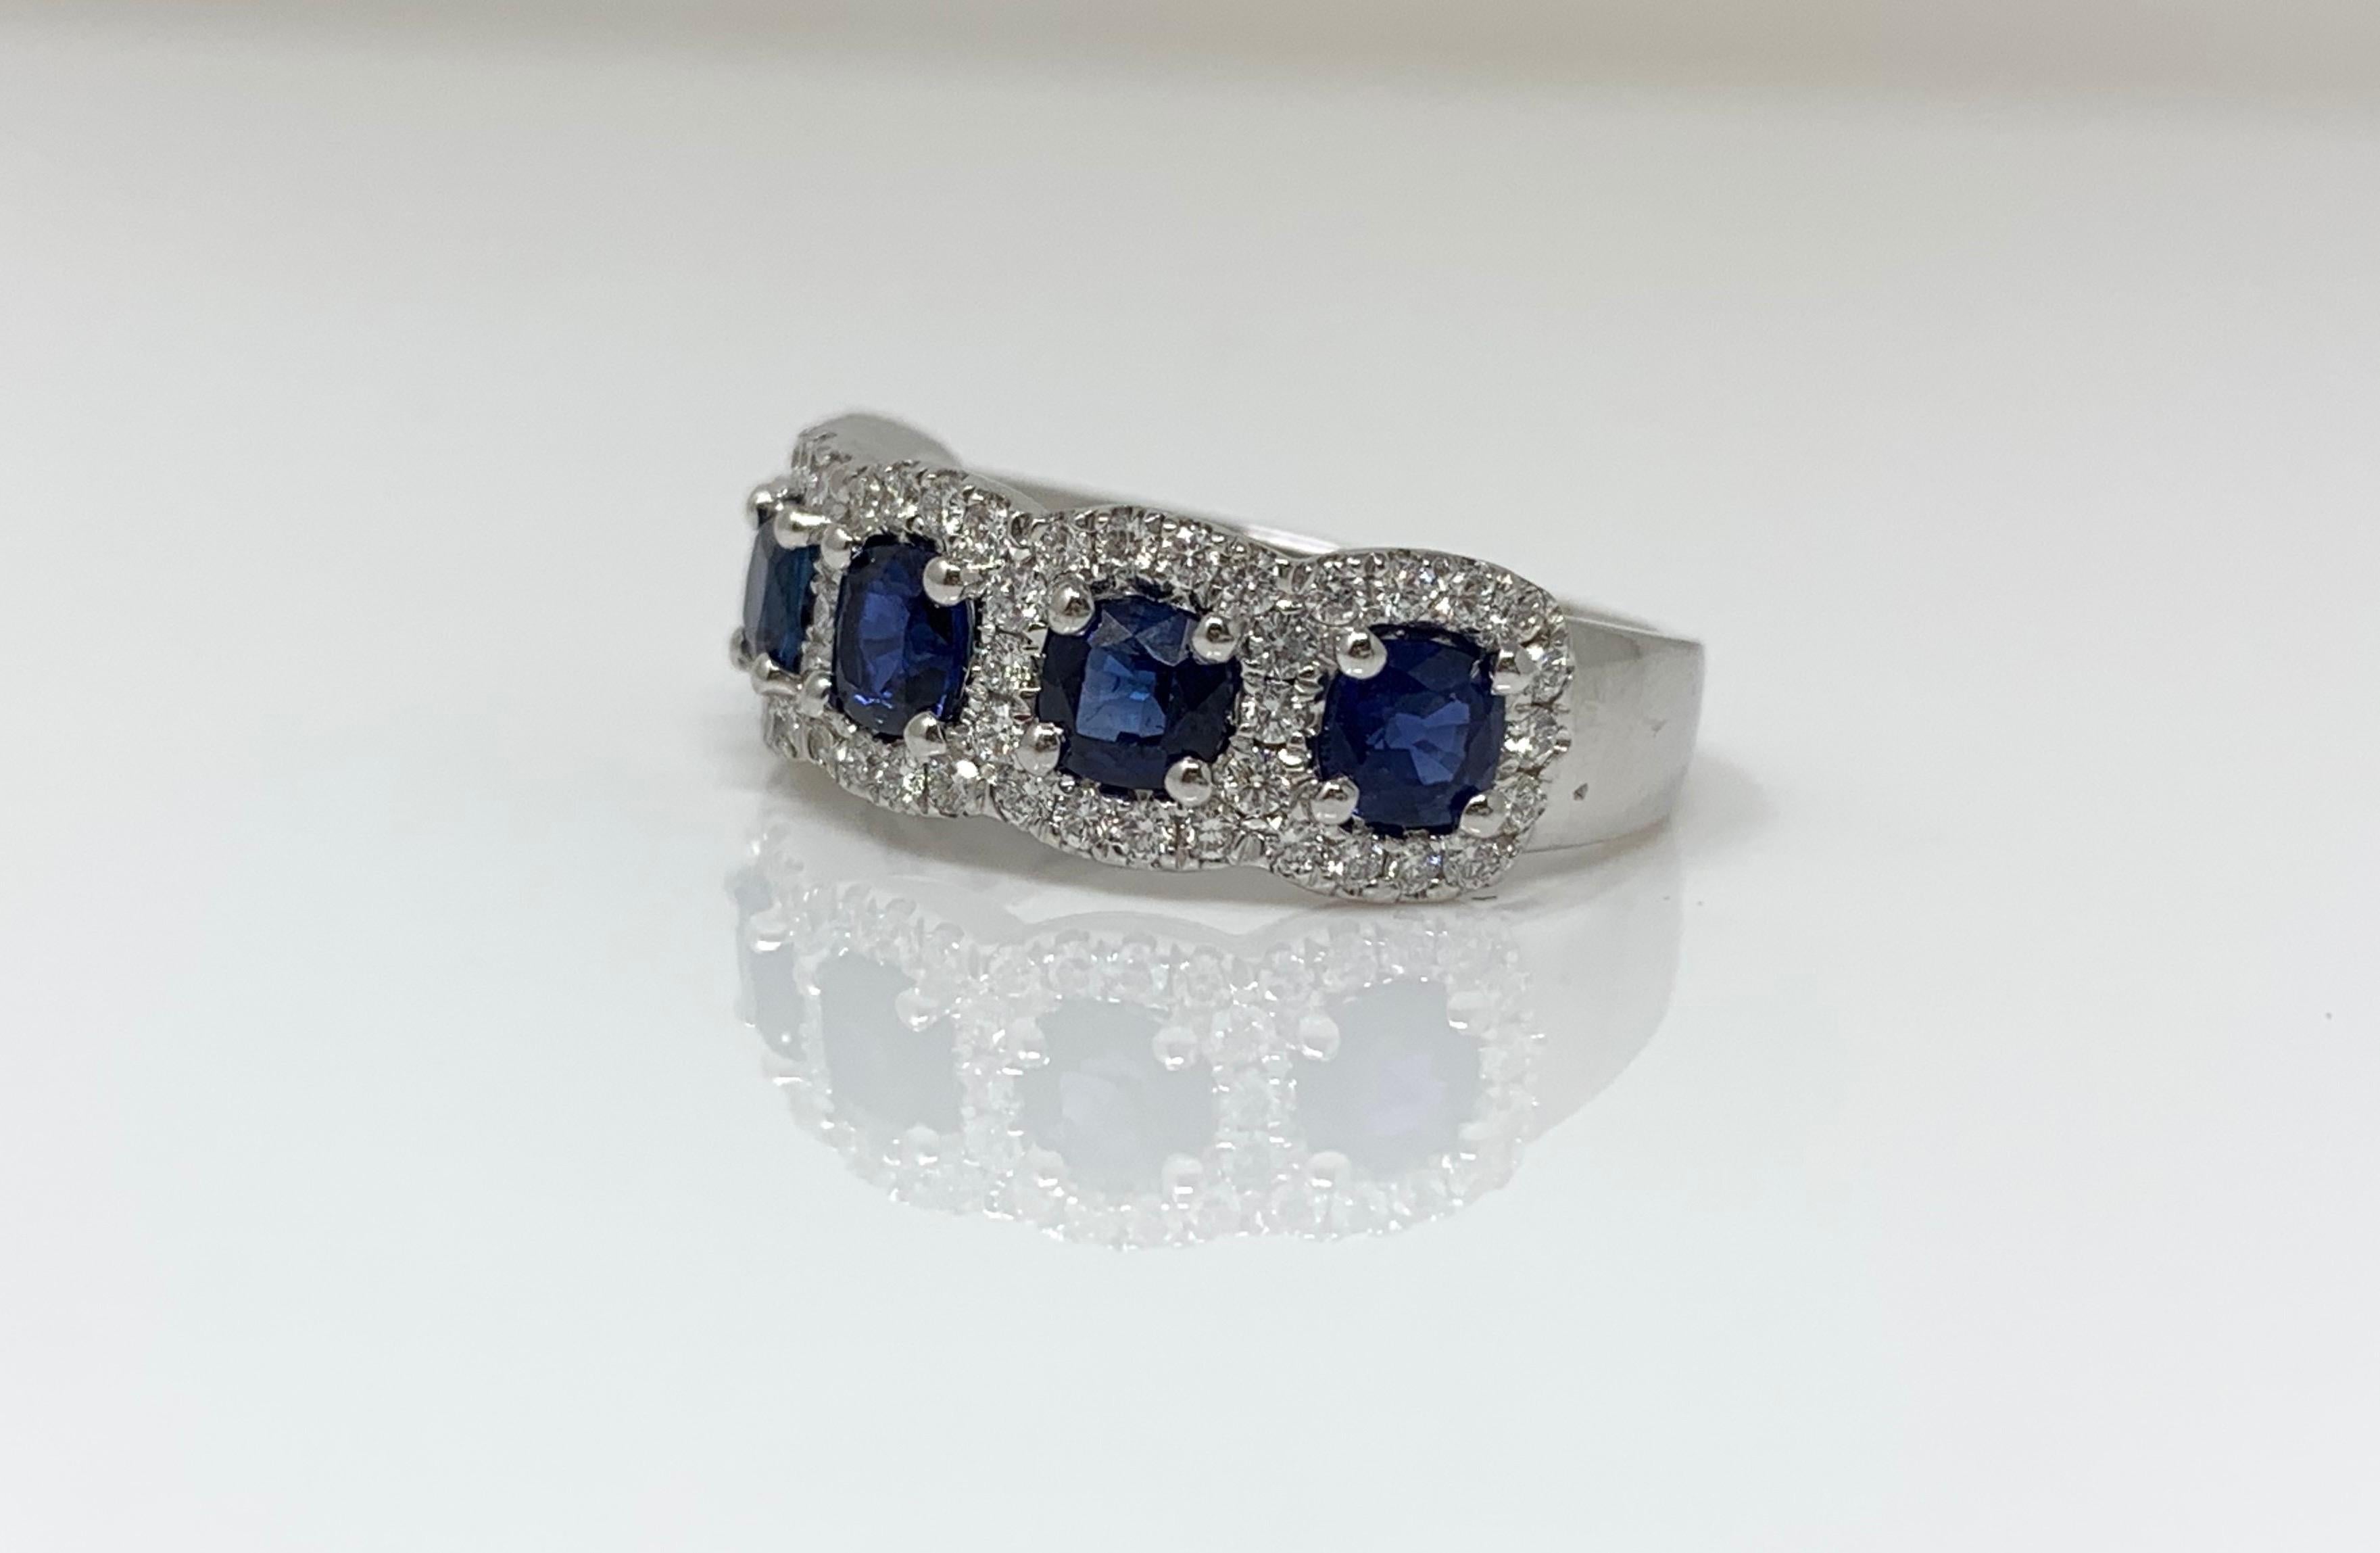 Moguldiam Inc's blue sapphire and diamond wedding band set in 18k white gold.

Blue sapphire weight : 1.83 carat 
Diamond weight : 0.50 carat 
Metal : 18 k white gold 
Ring size : 6 1/2 